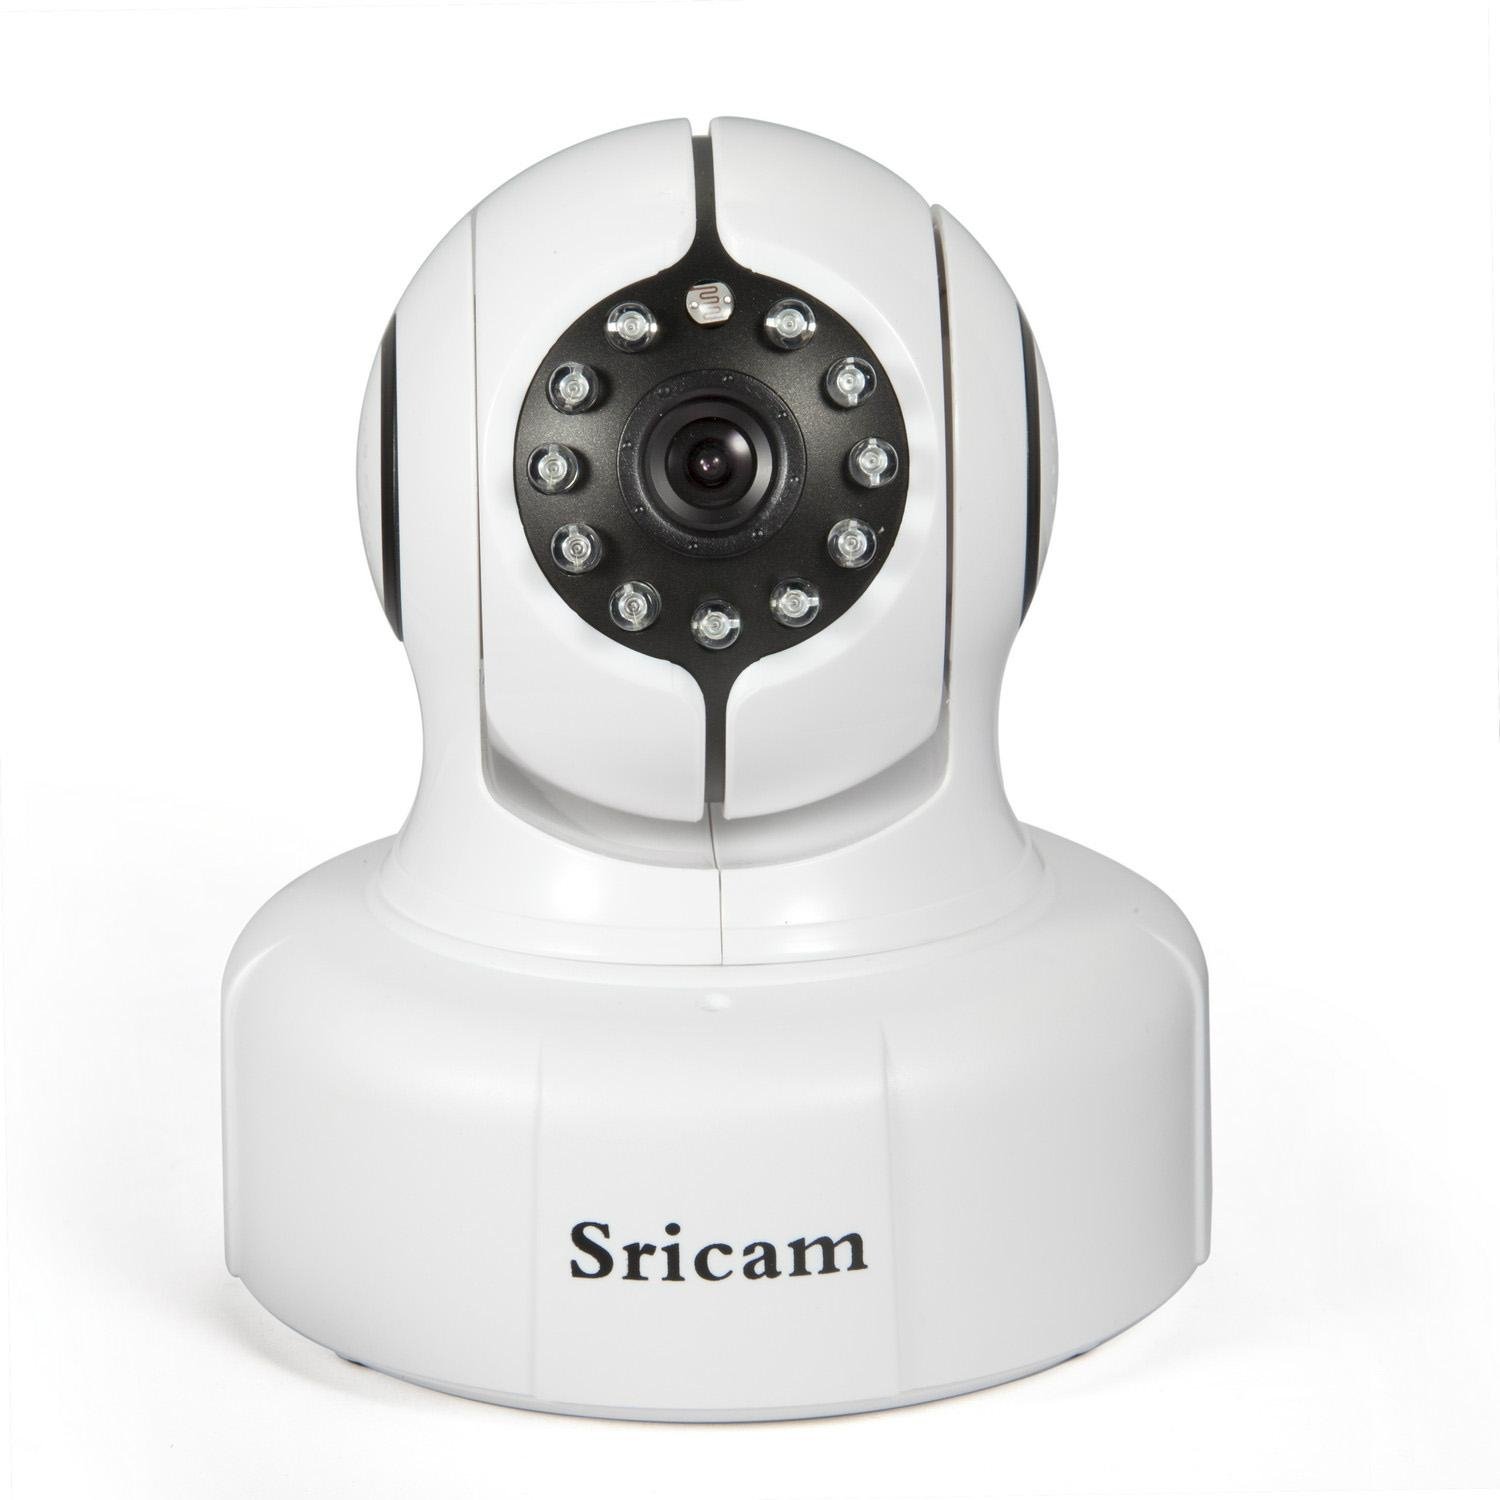 New Sricam SP011 HD 3.6mm Night vision 10m Hidden wireless ip camera 720p 5